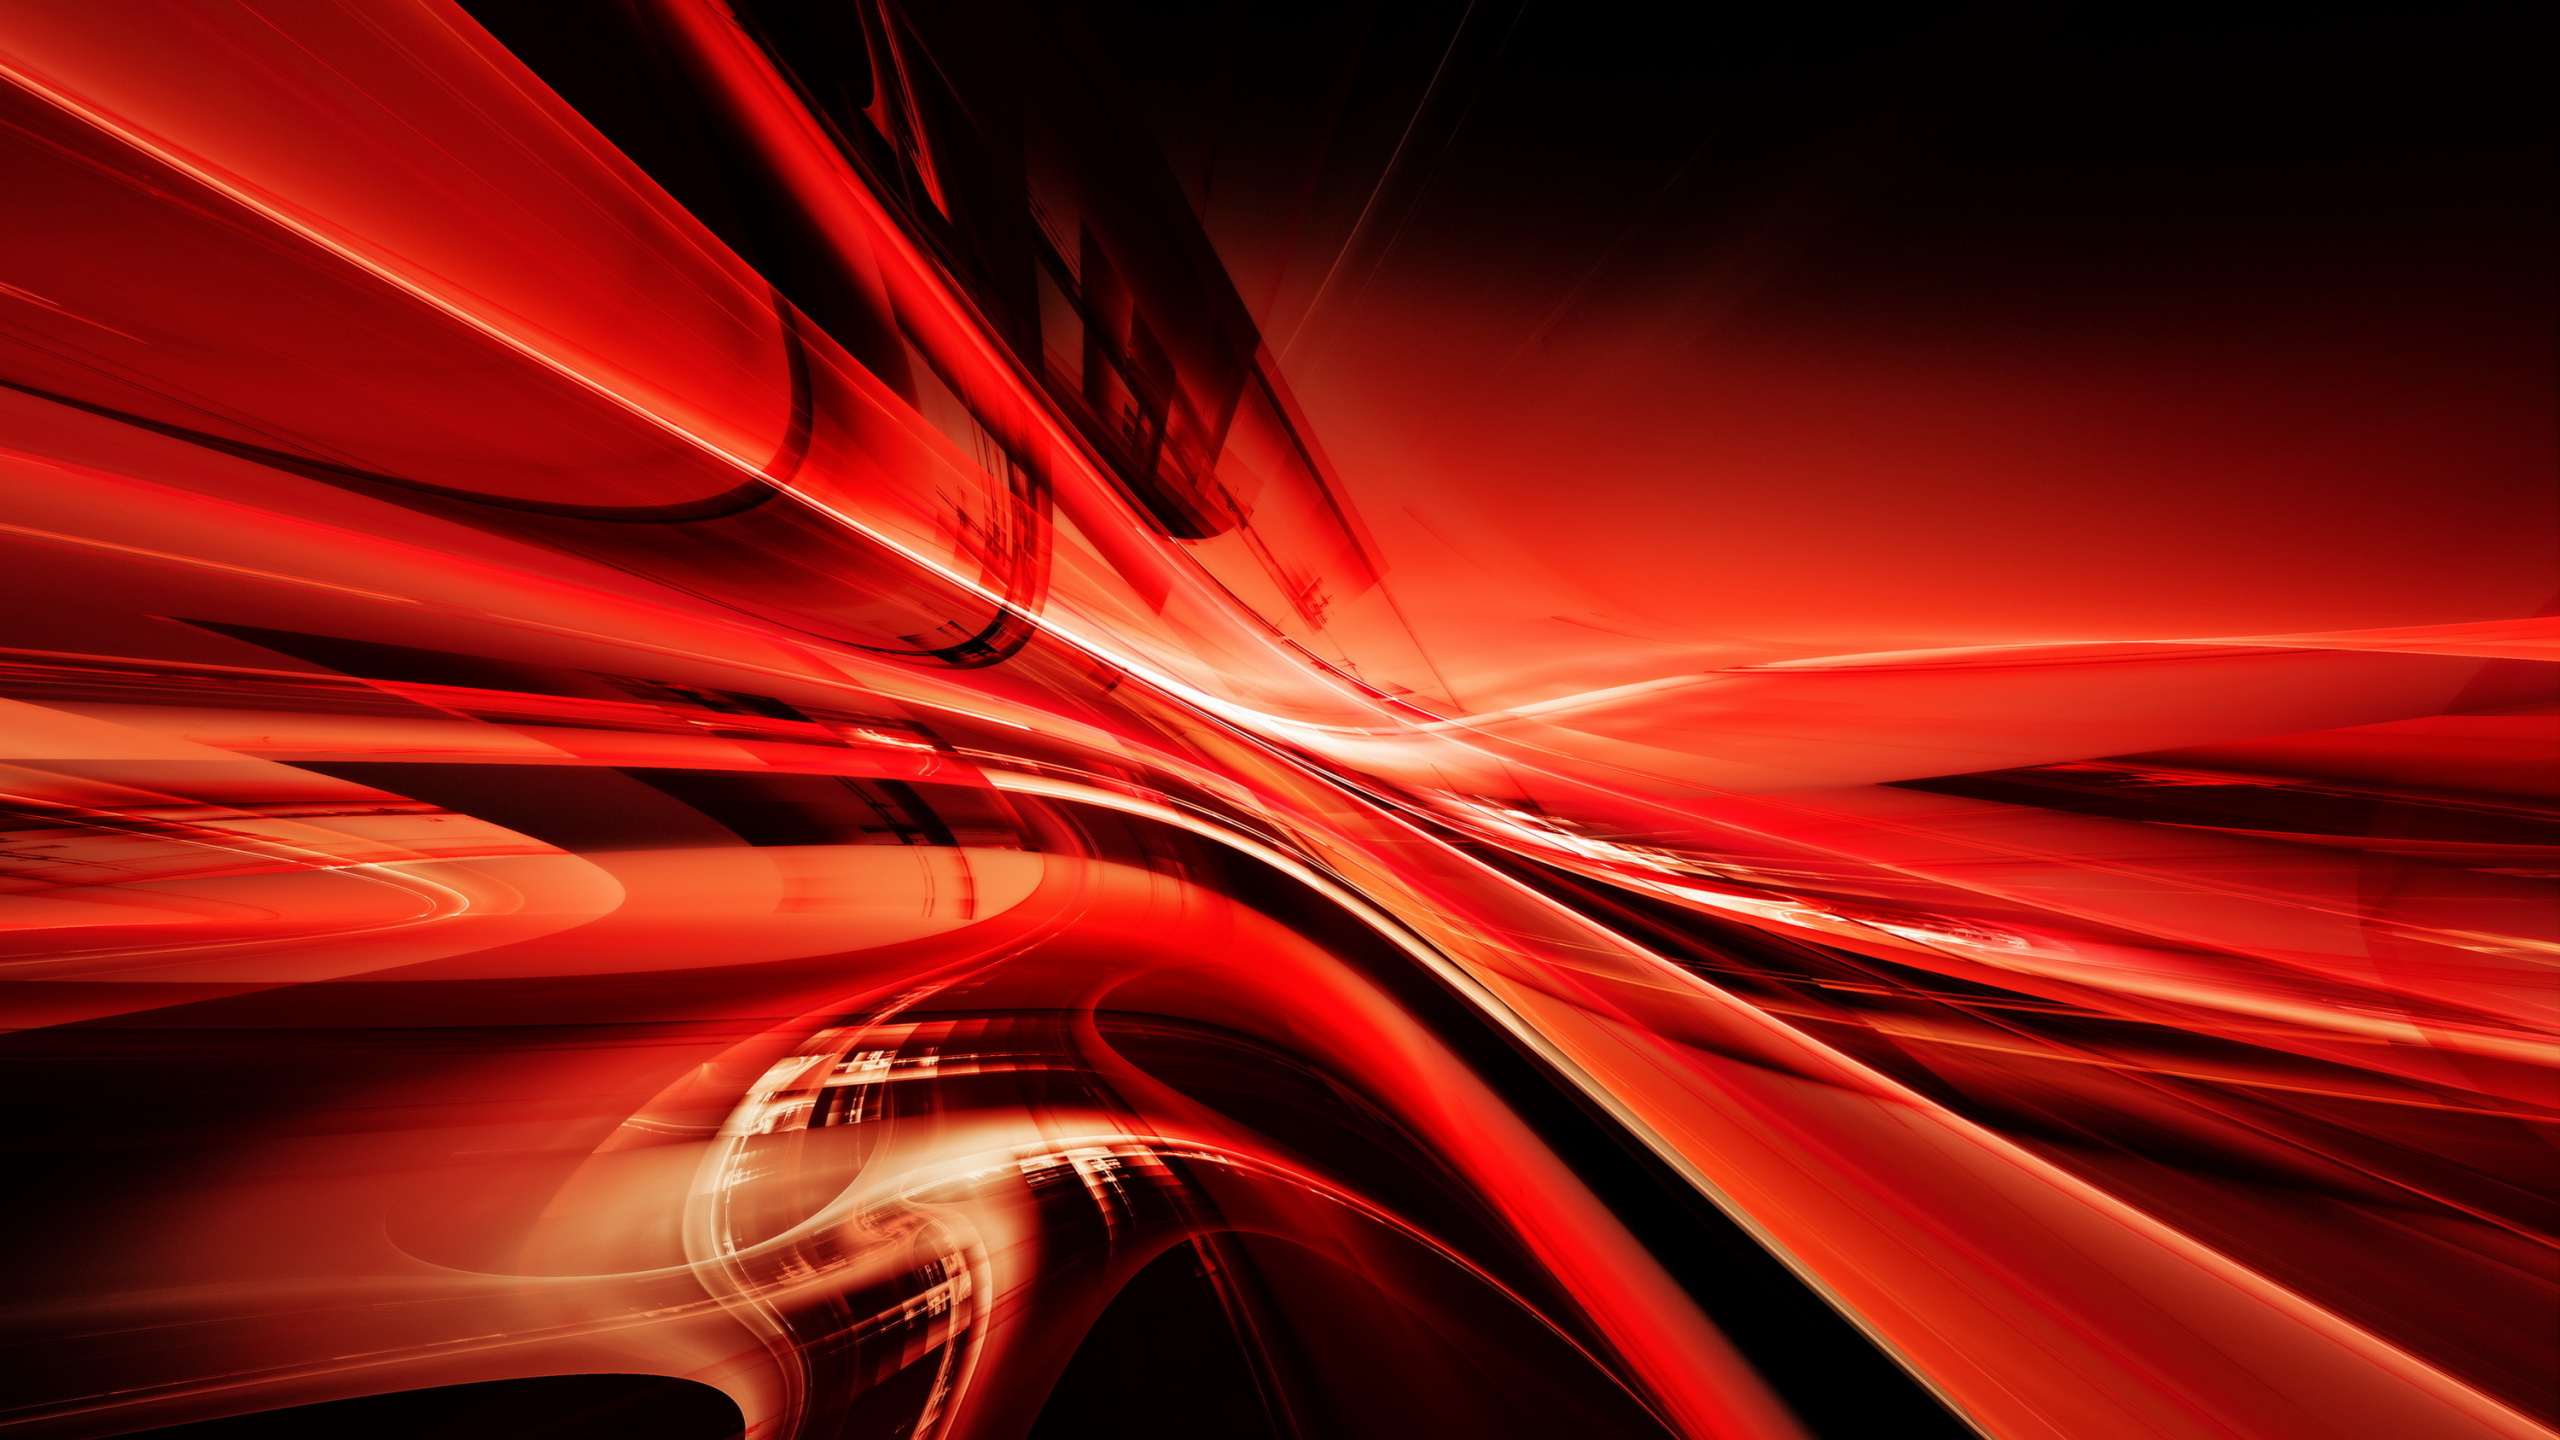 Red and Black Light Digital Wallpaper. Wallpaper in 2560x1440 Resolution